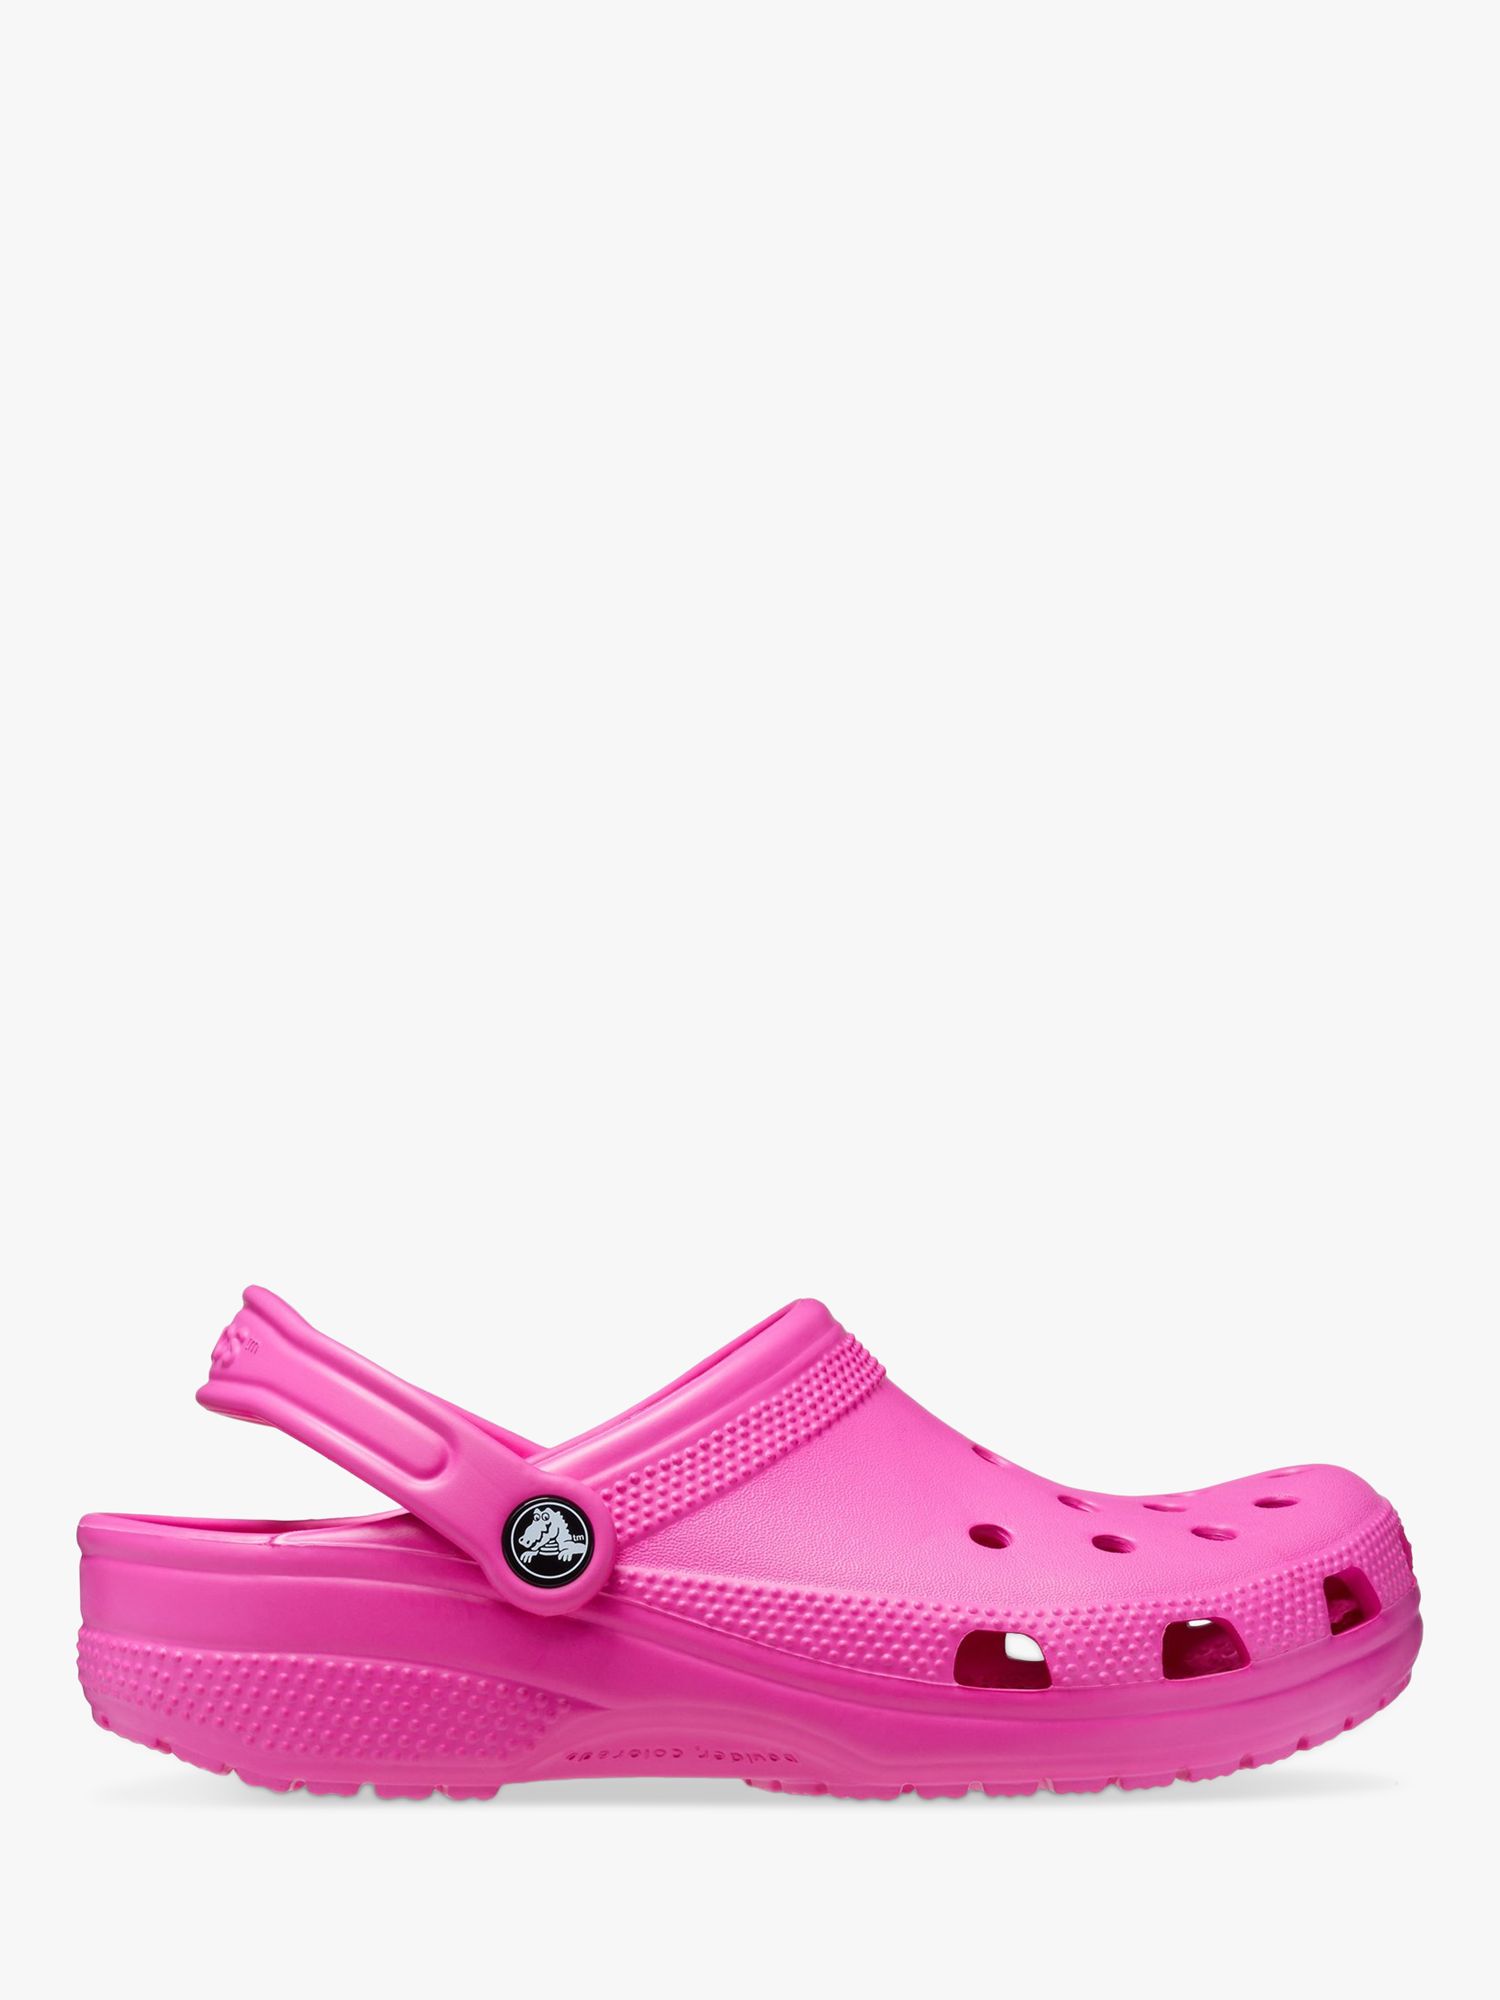 Crocs Classic Clogs, Pink, 5